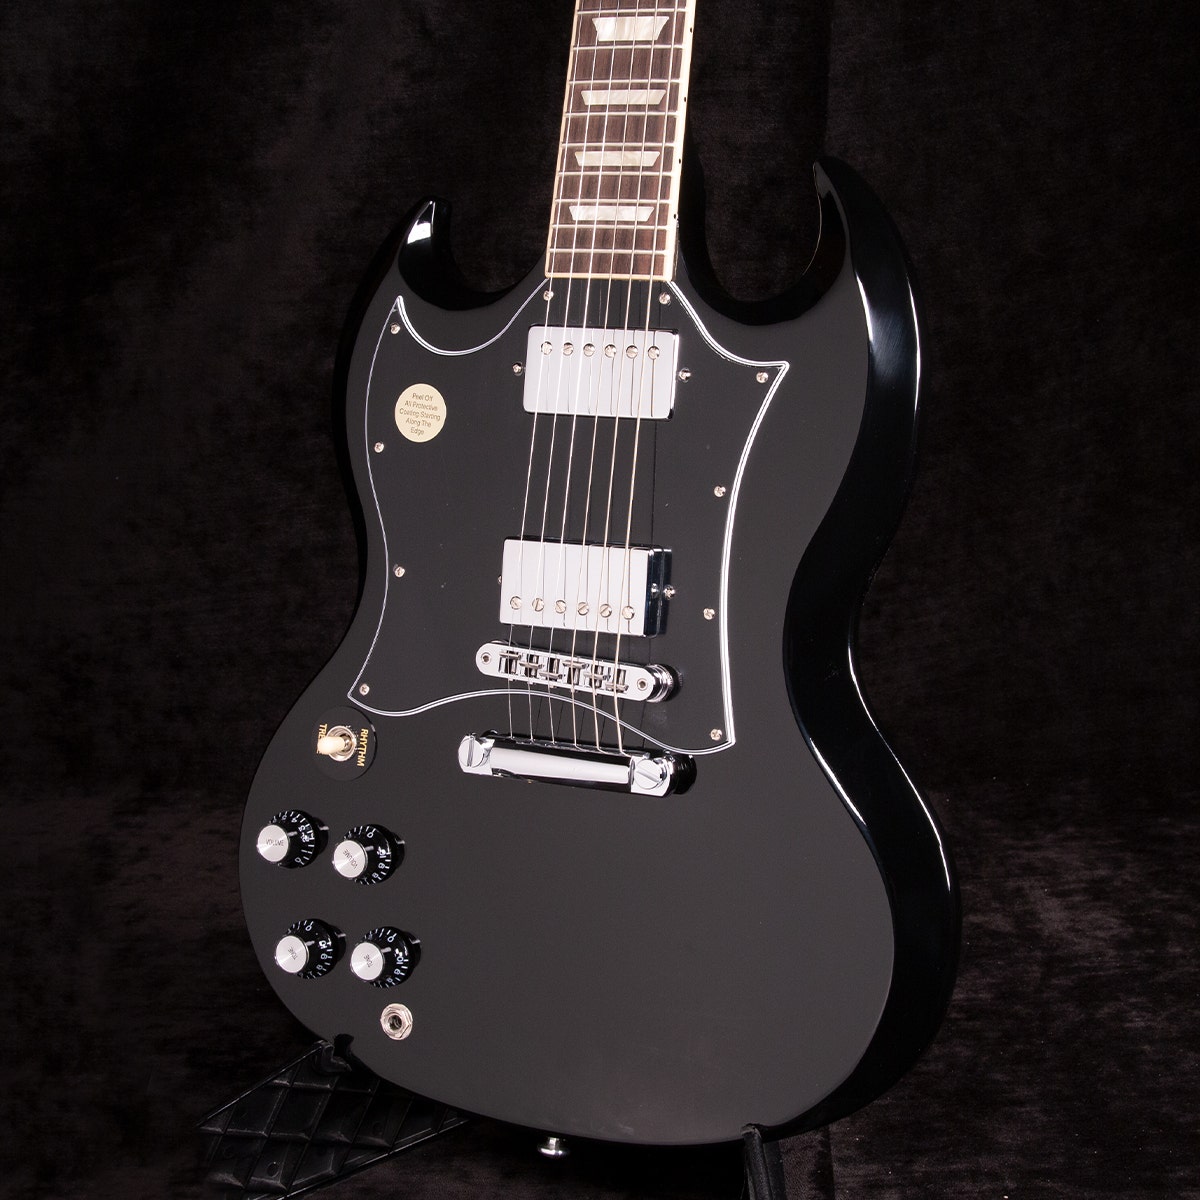 Gibson SG Standard Left-Handed Electric Guitar